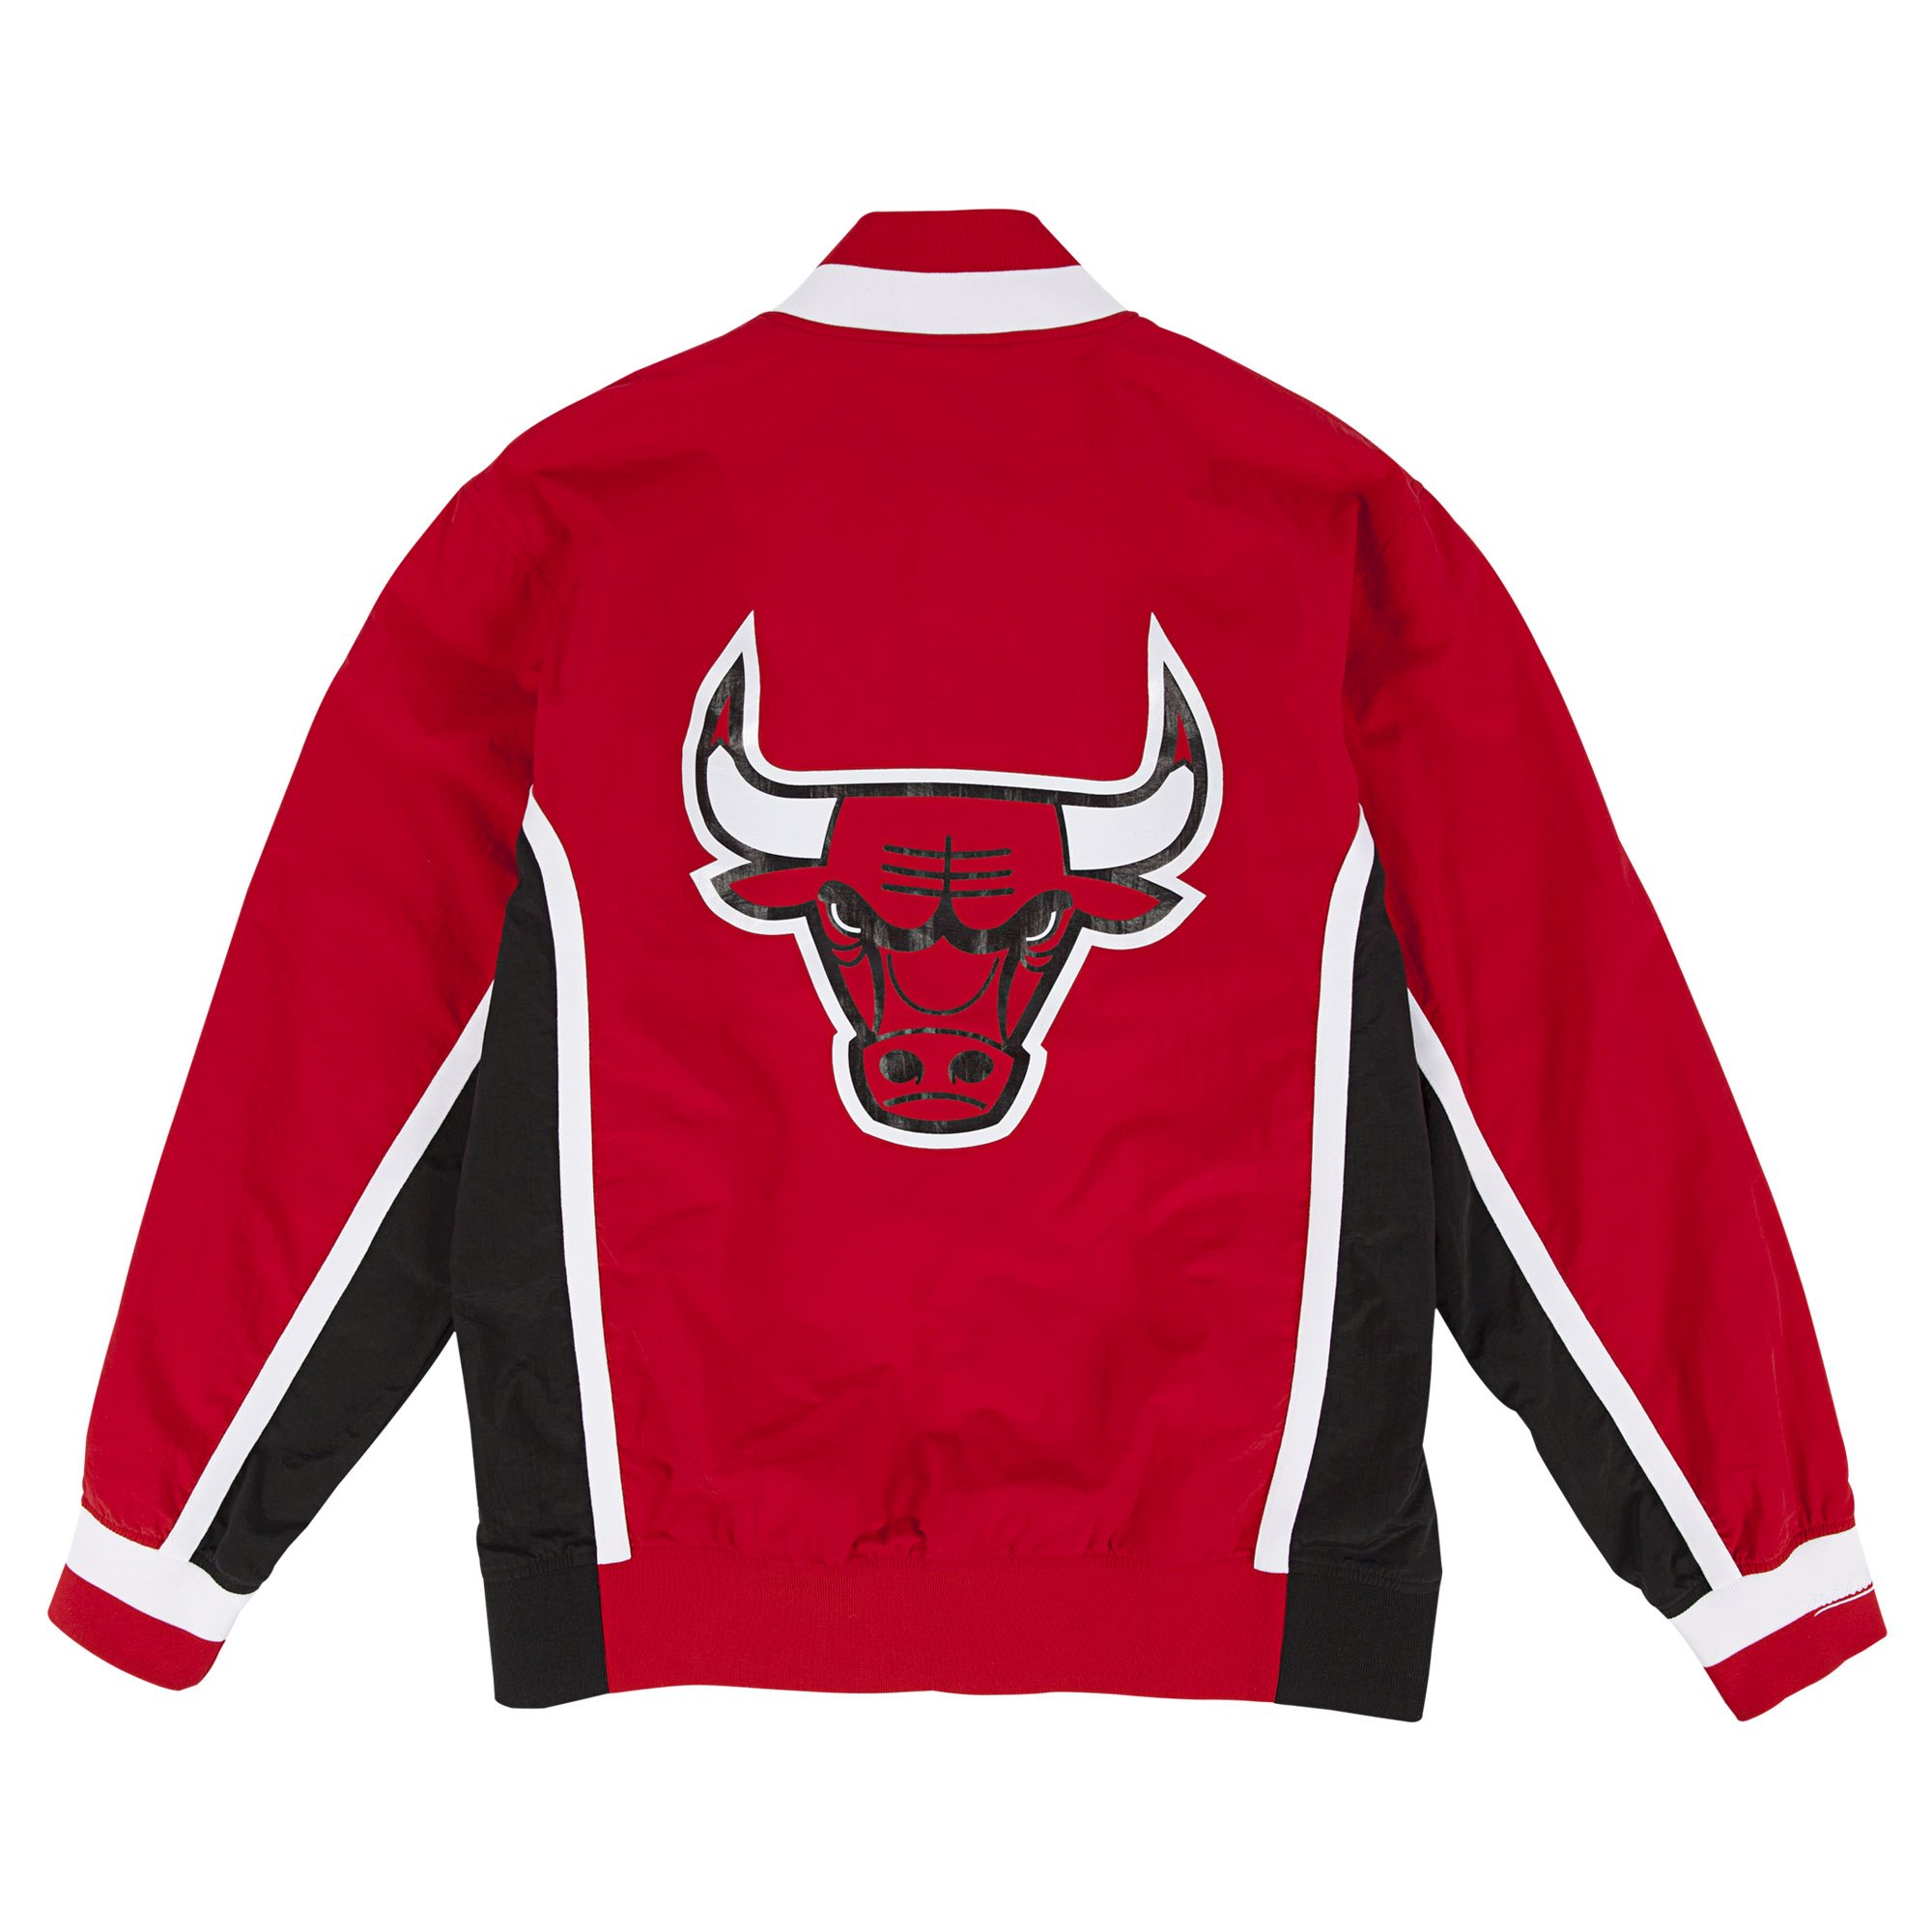 M&N Authentic Warm Up Jacke Chicago Bulls 1992-93 rot | Jacken ...